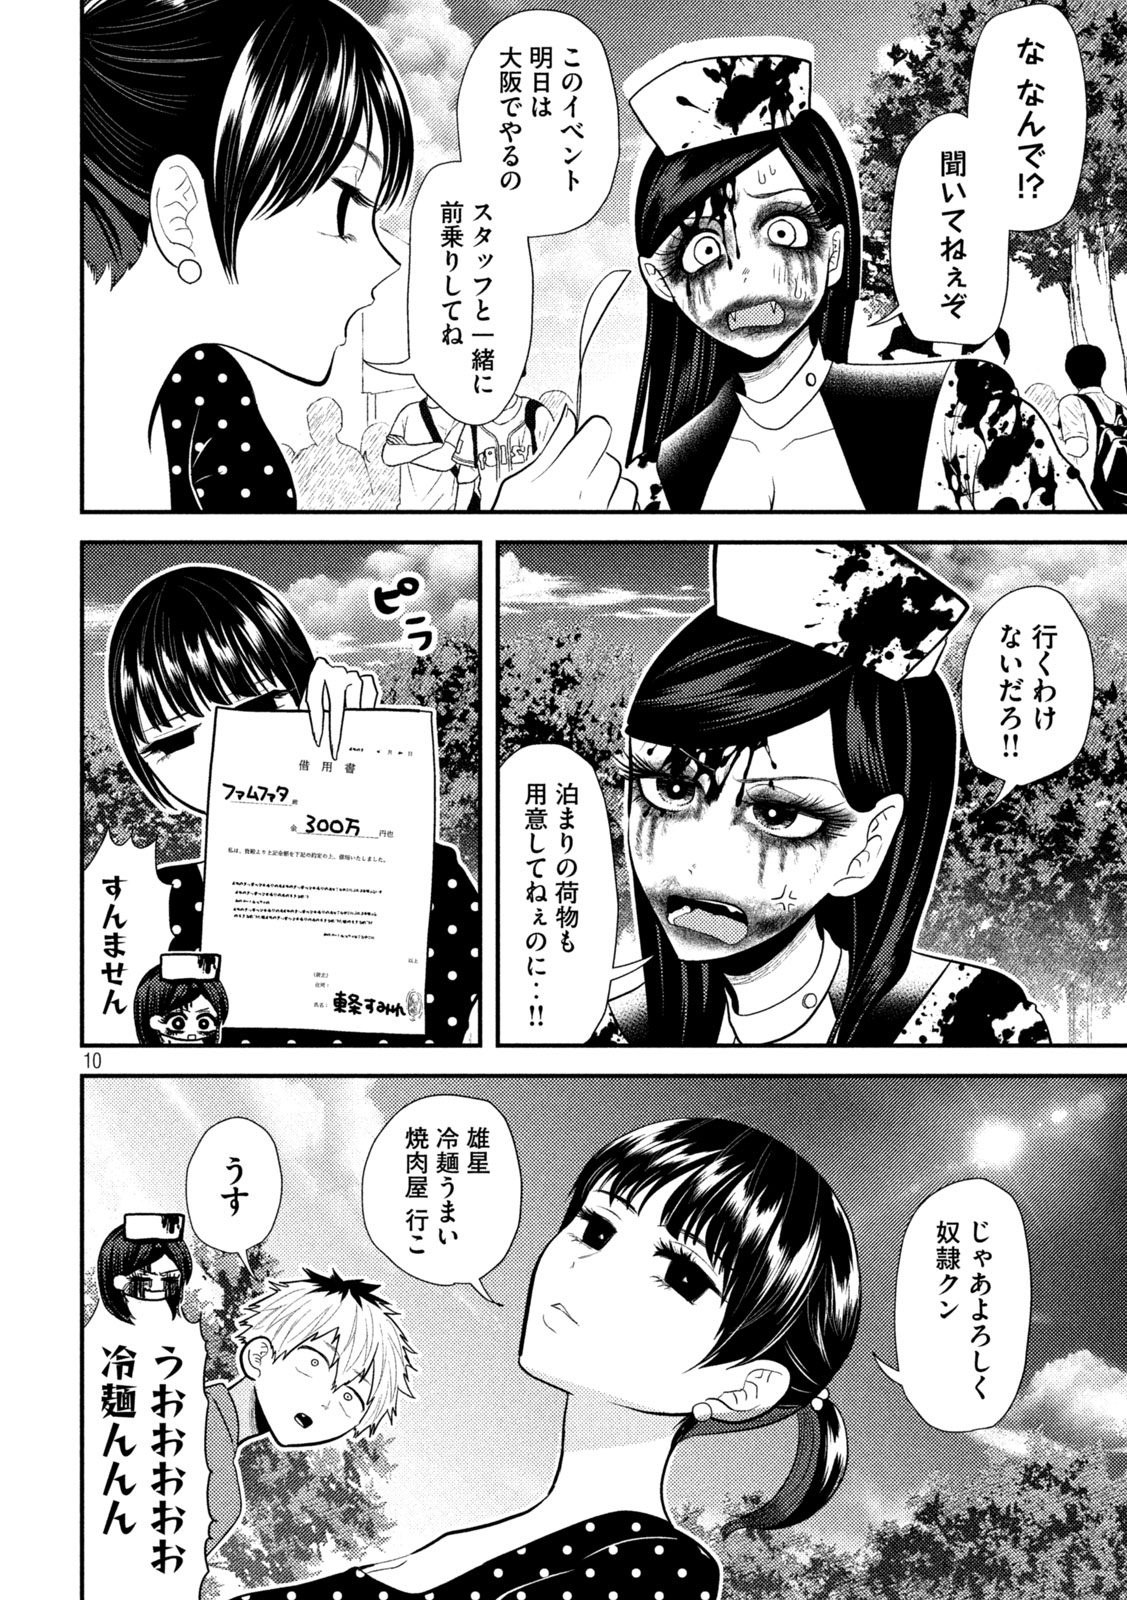 Heisei Haizanhei Sumire-chan - Chapter 22 - Page 10